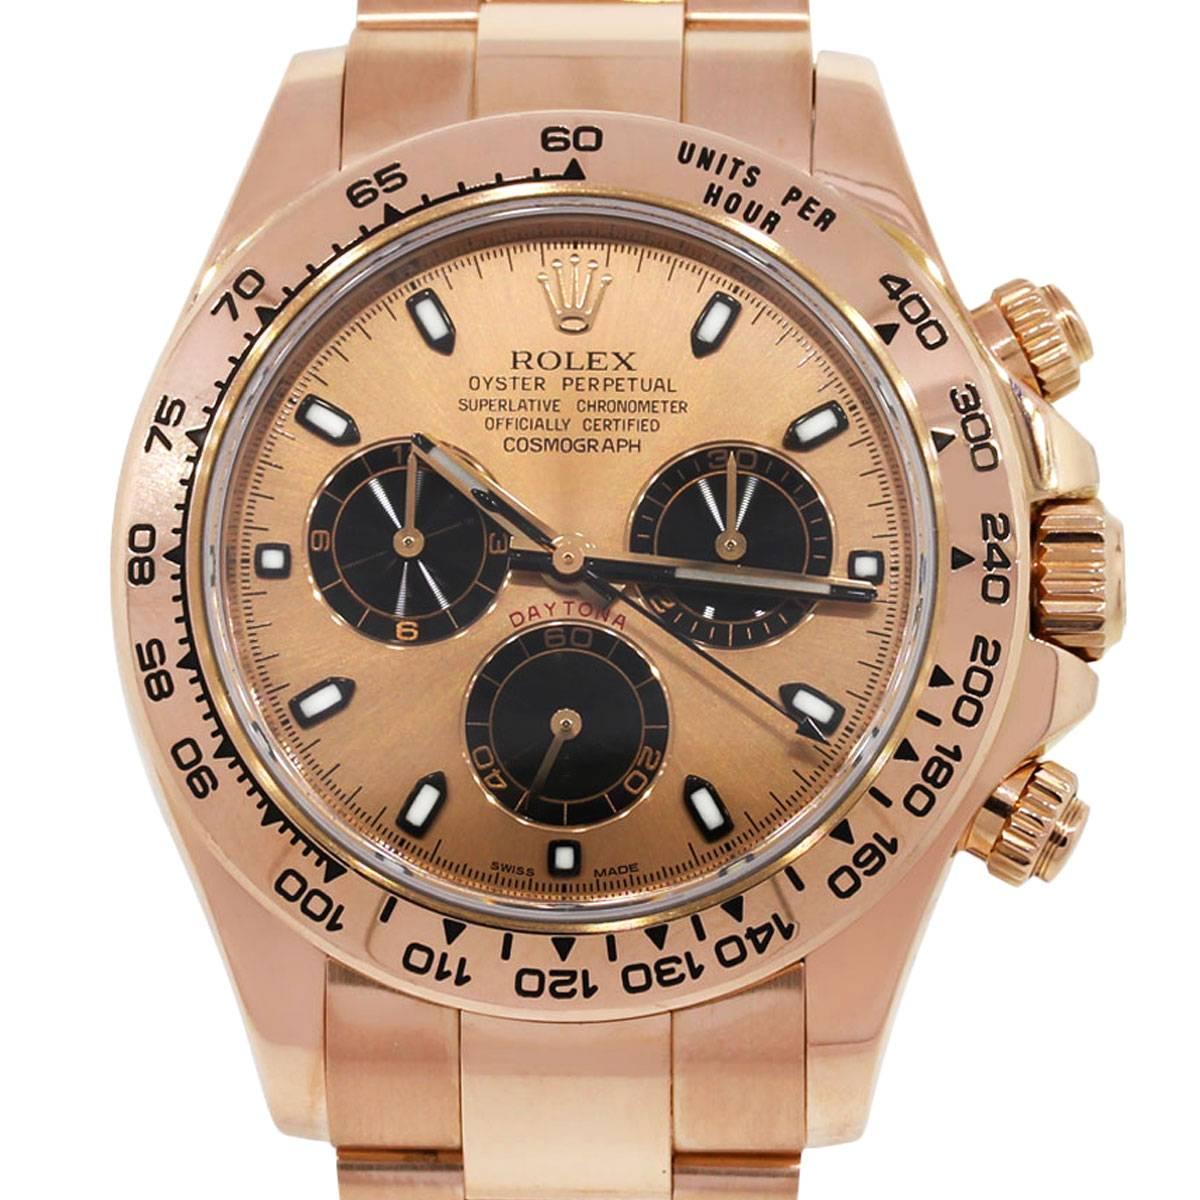 Rolex Rose Gold Daytona Chronograph Automatic Wristwatch Ref 116505 